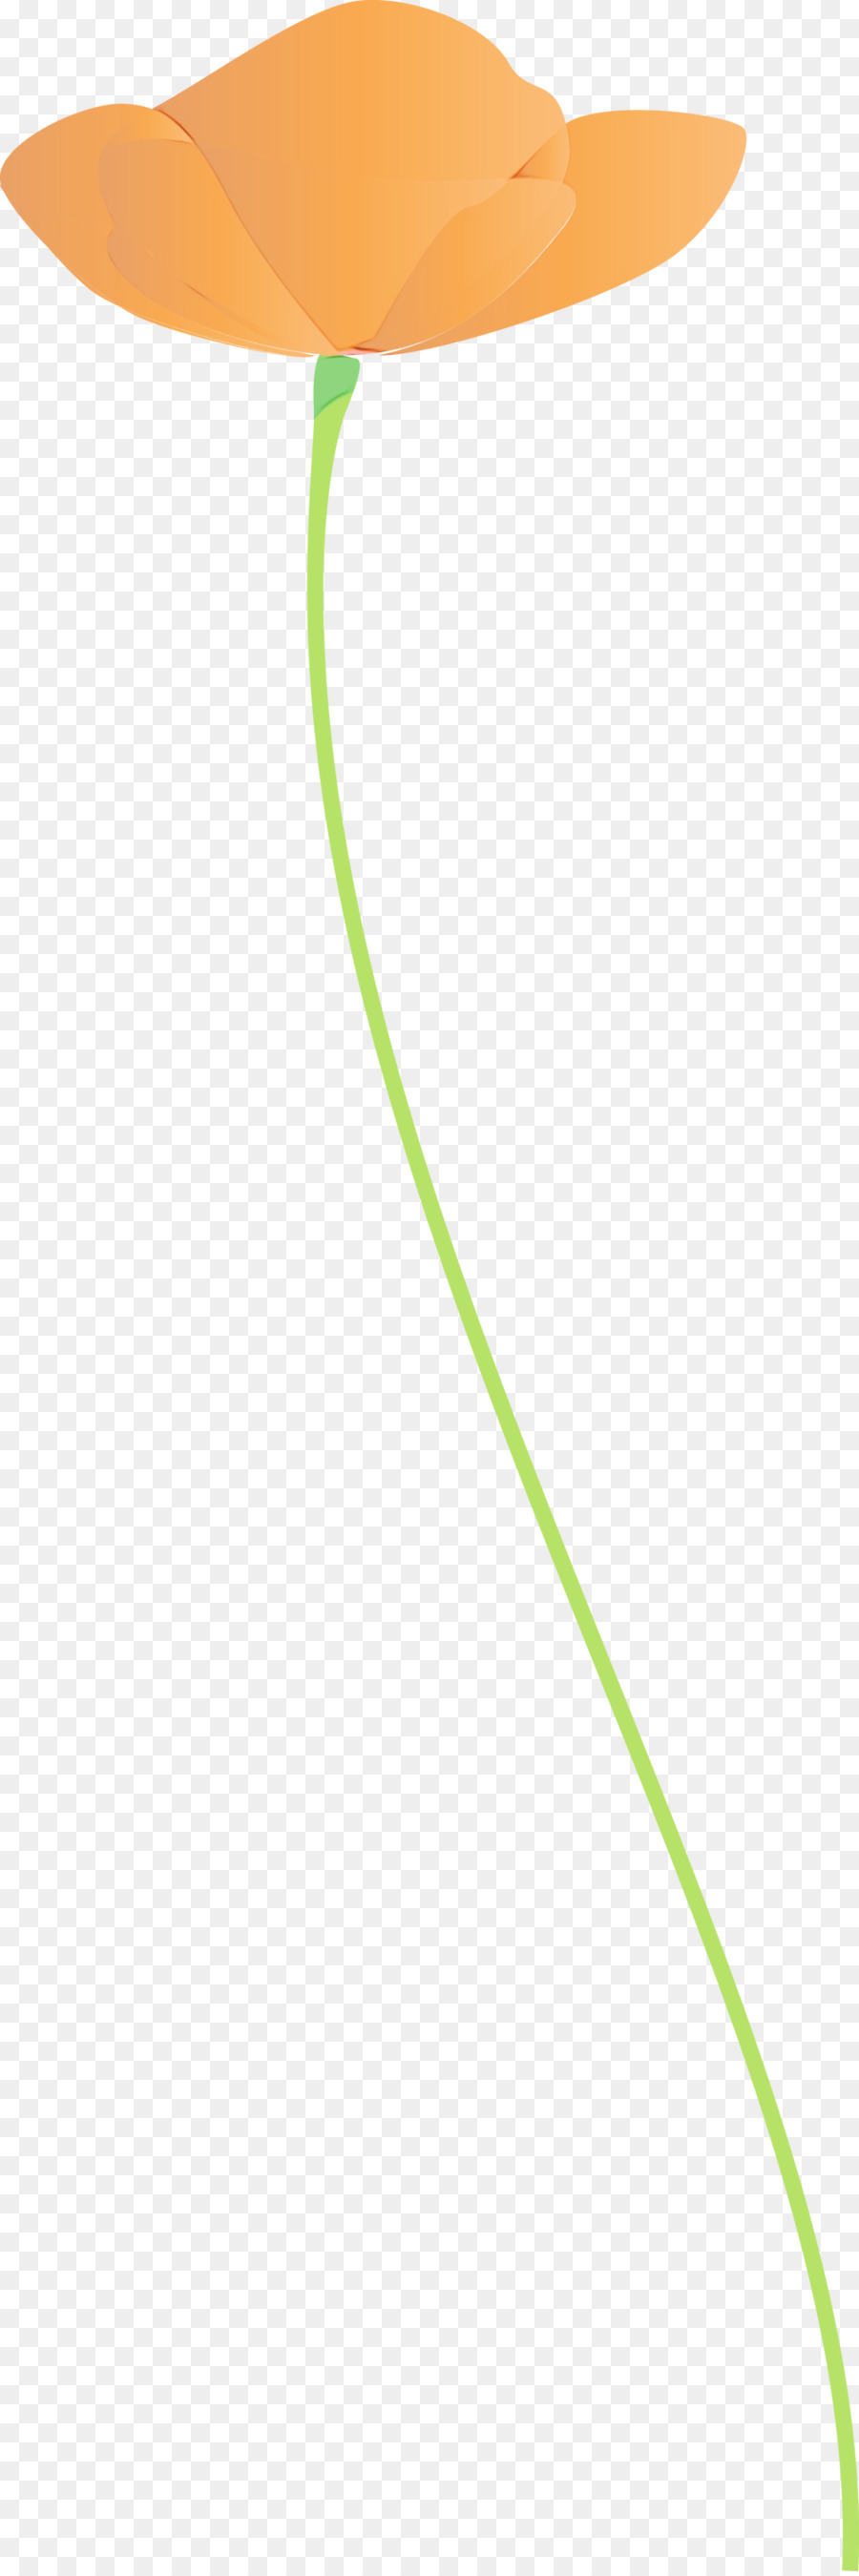 linea verde pianta a foglia - 